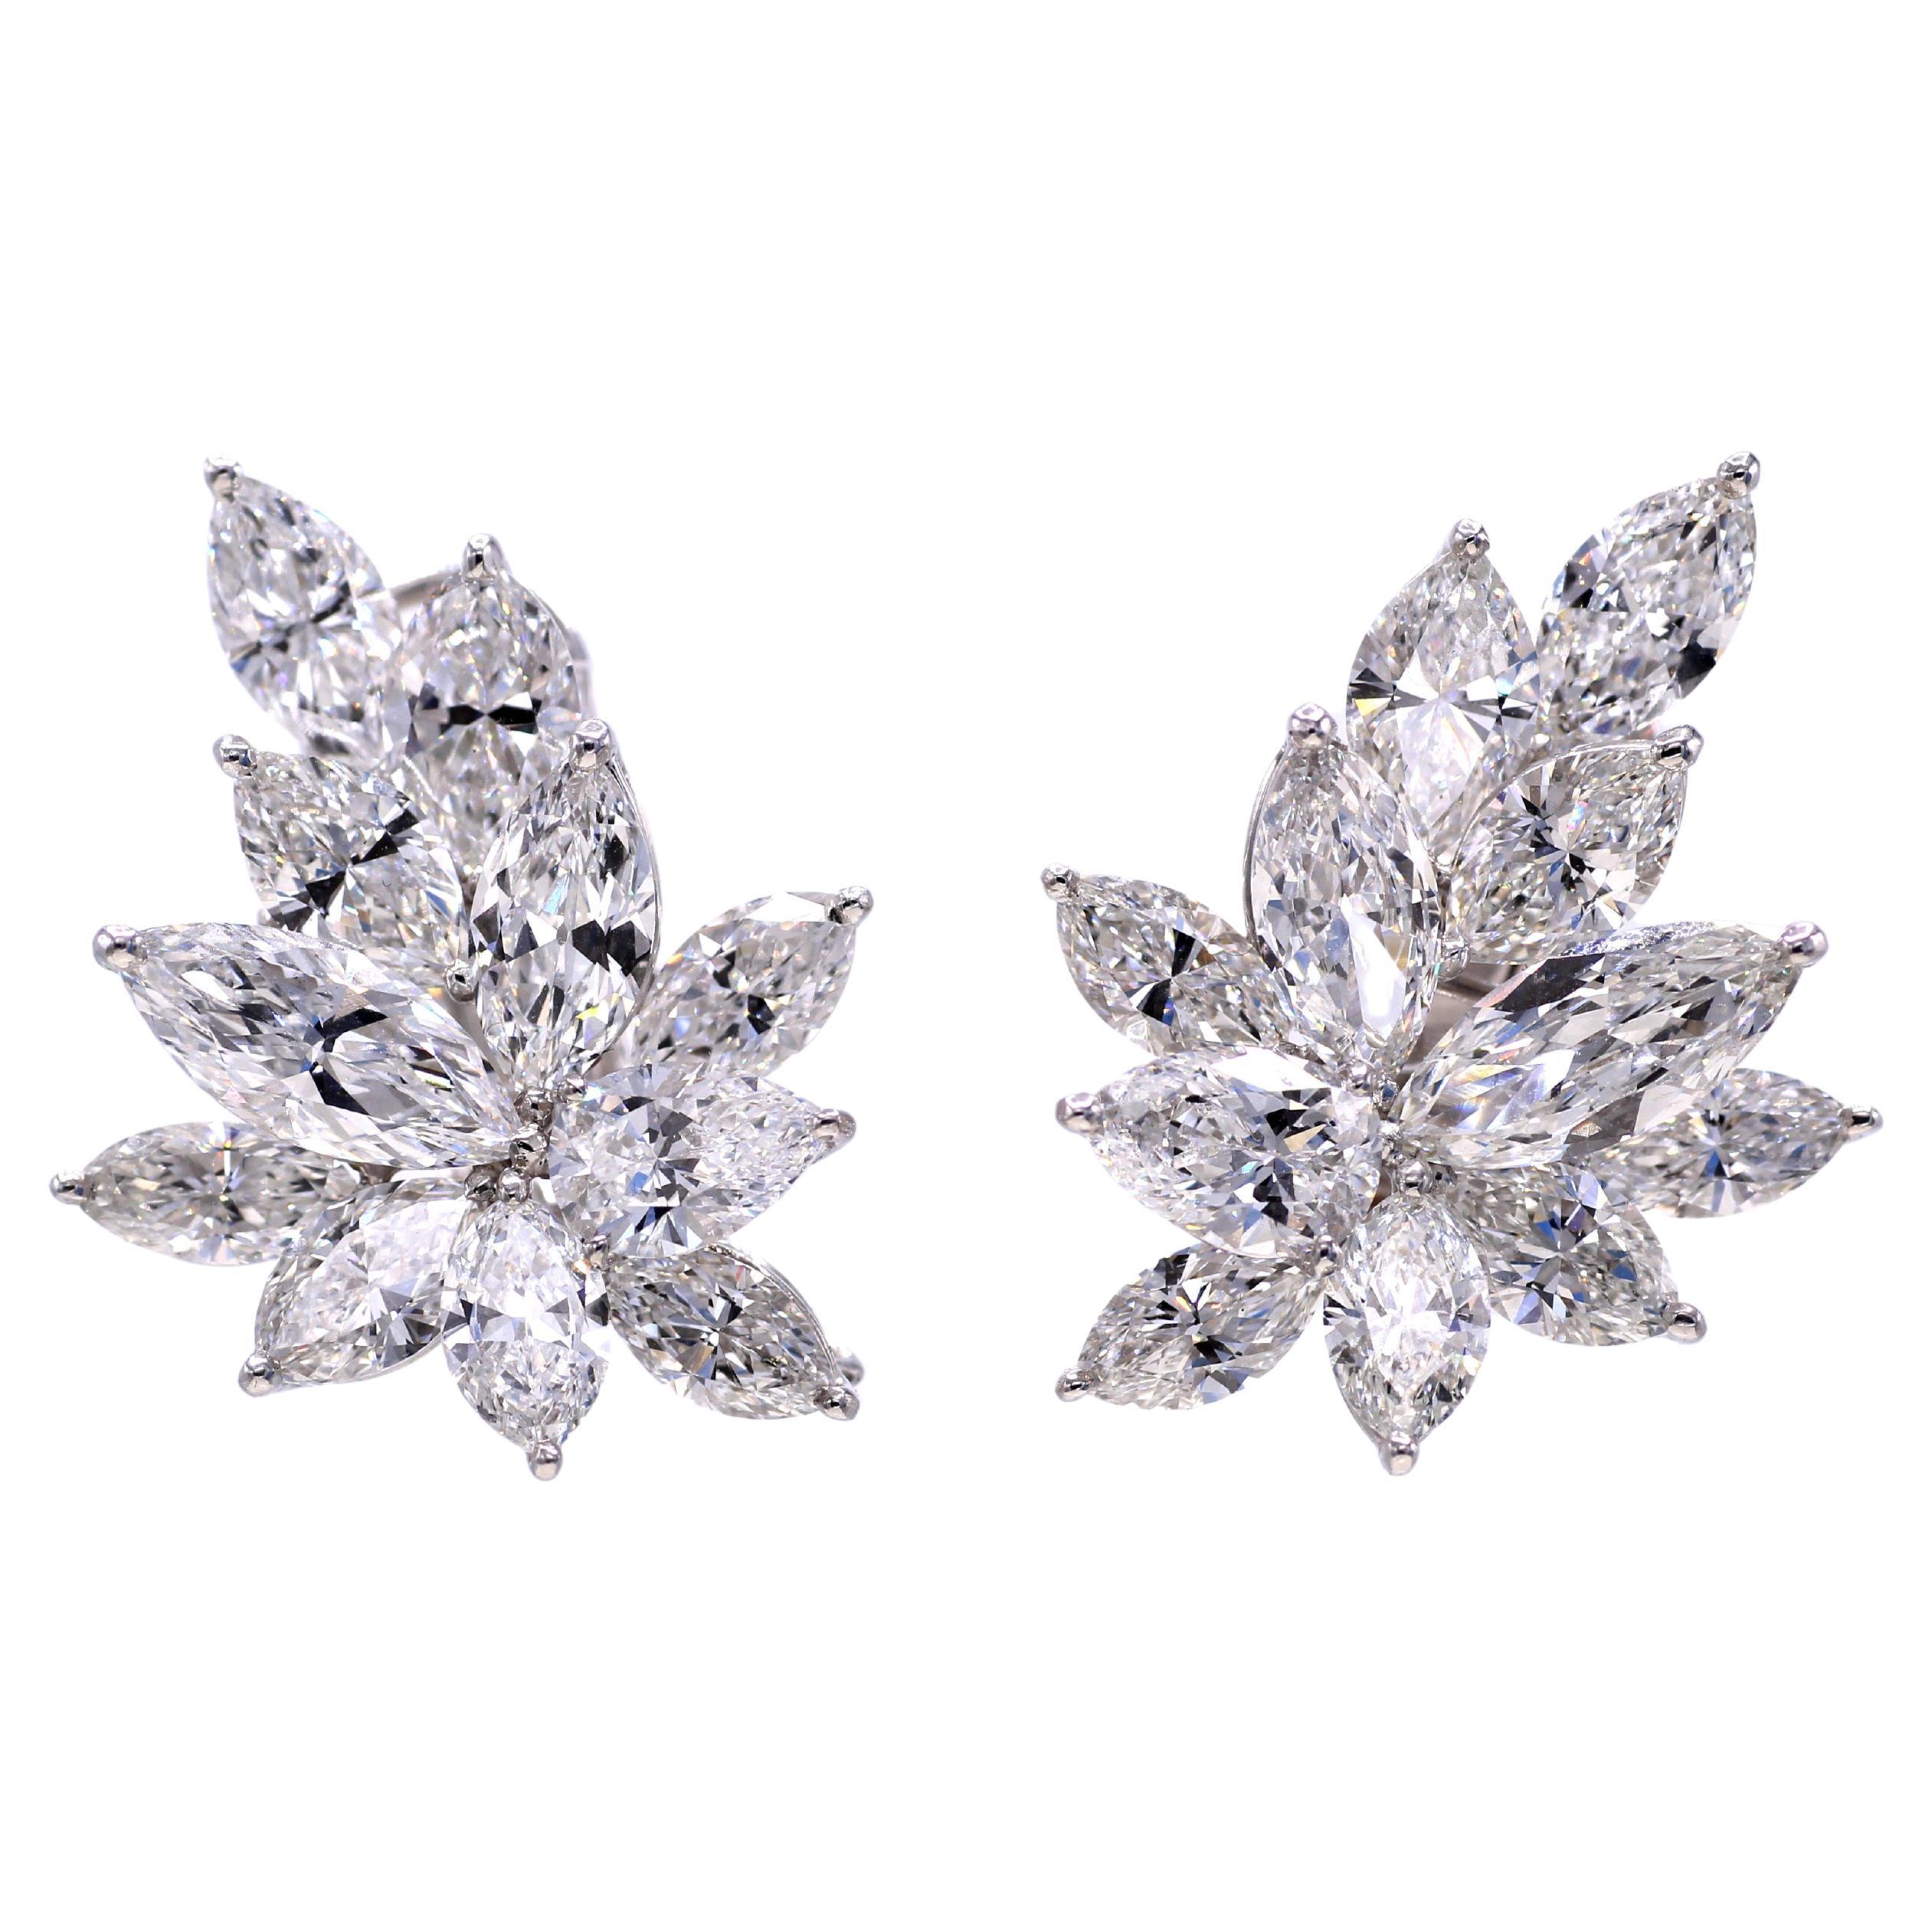 Stunning 16.58 Carat GIA Certified Diamond Platinum Cluster Earrings